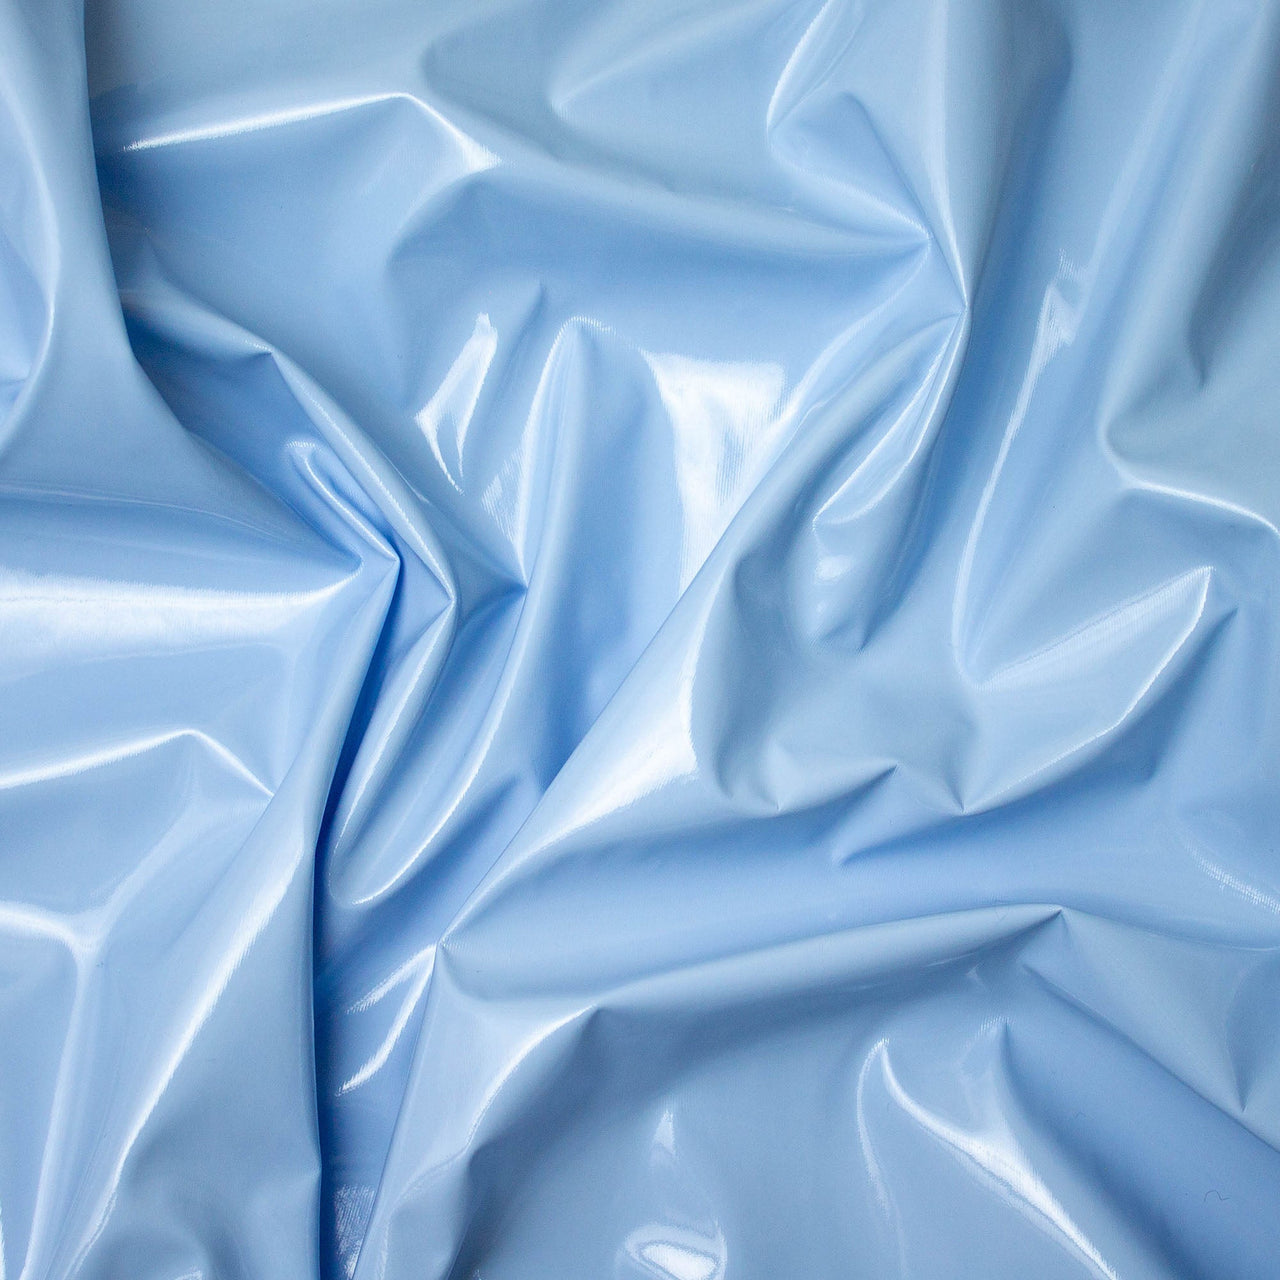 Pale Blue PVC Shiny Stretch Fabric - 1 Way Natural Stretch - PU Coated